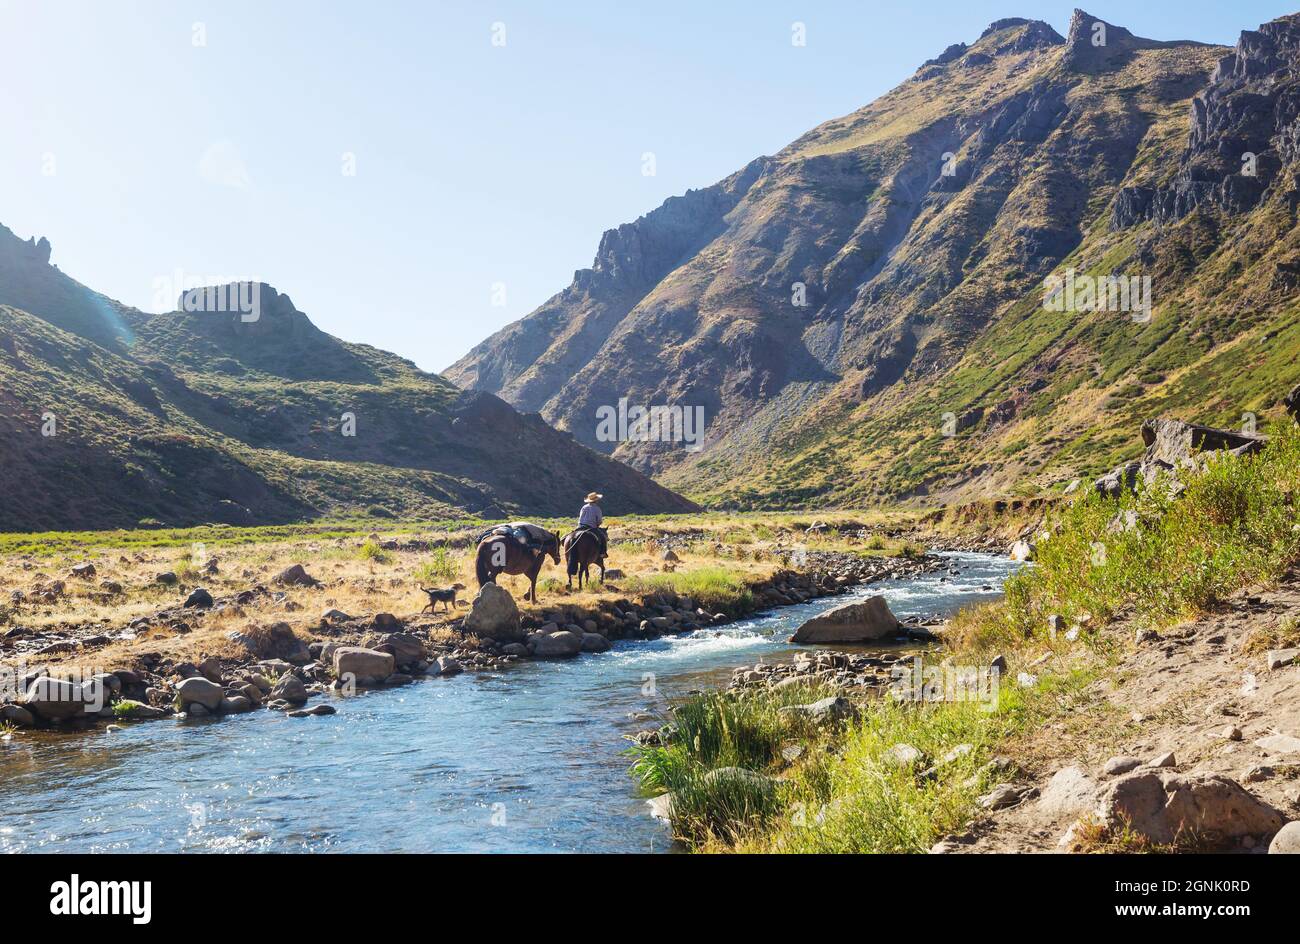 Gauchos in Patagonia mountains, Argentina Stock Photo